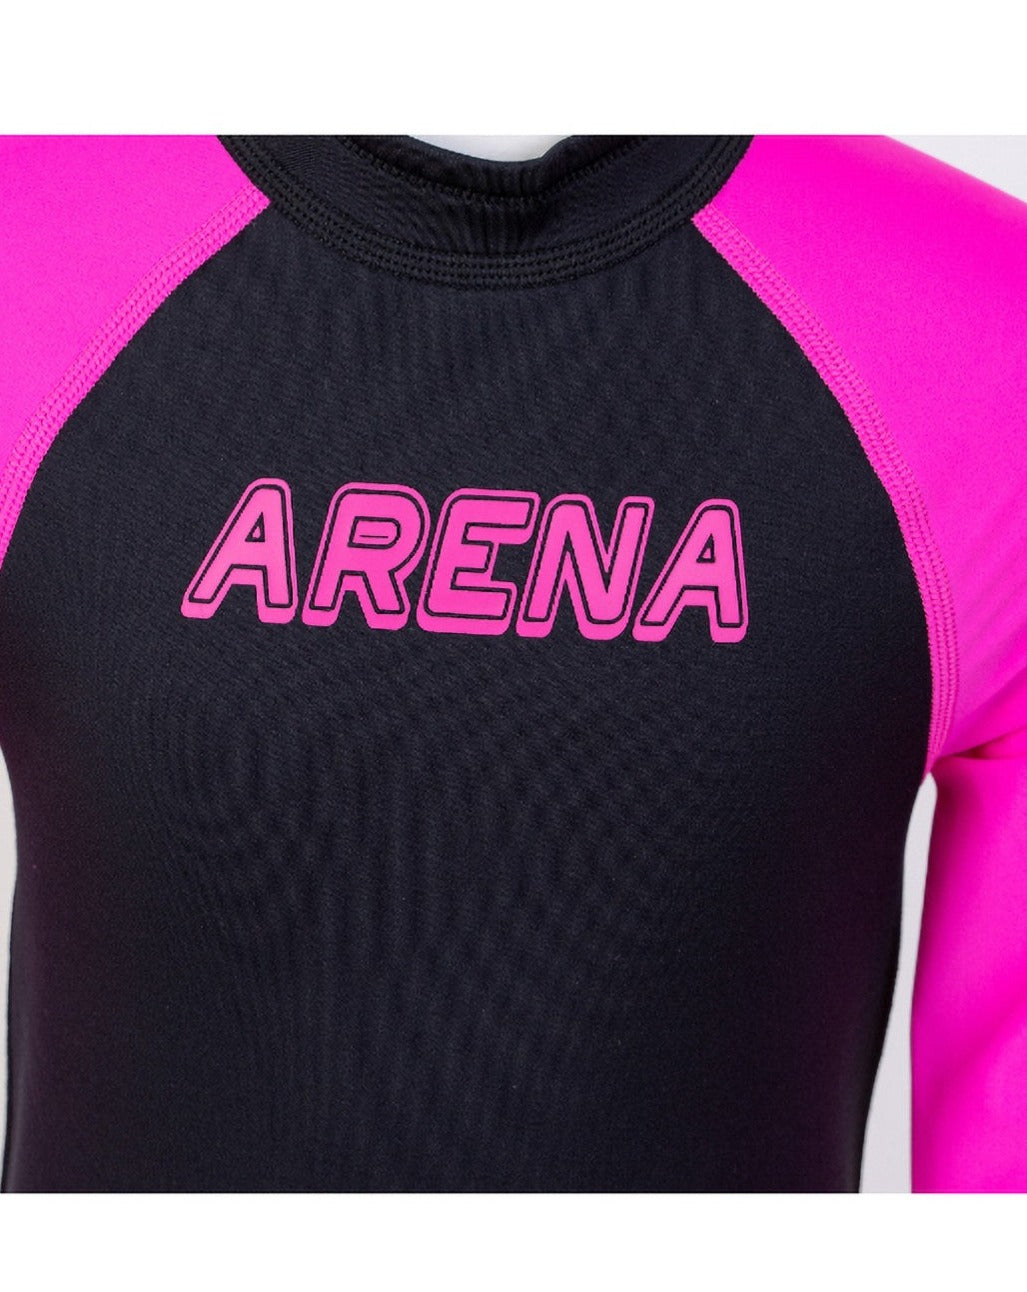 Arena Nos LS 2MM Neoprene Suit children's jumpsuit long-sleeved thermal jacket